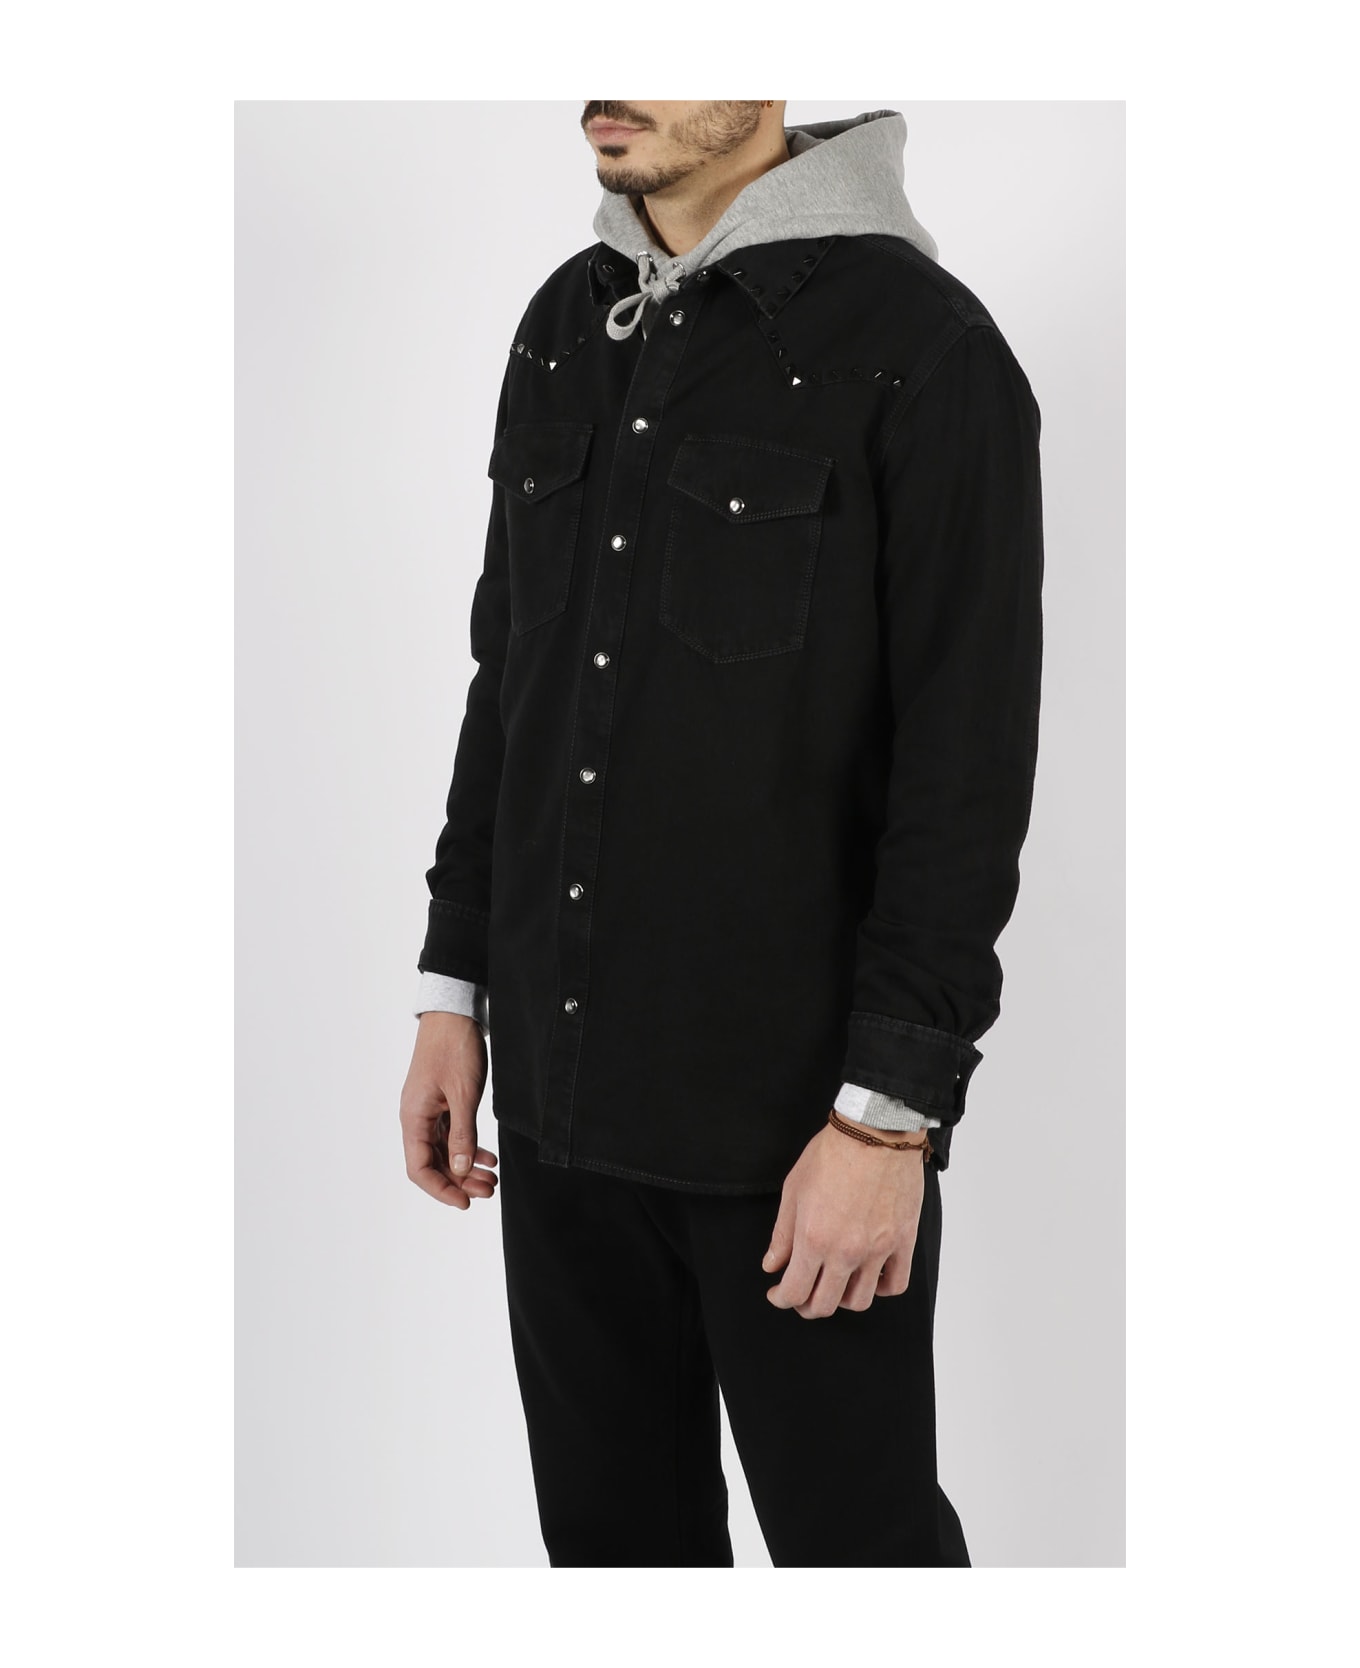 Valentino Black Denim Shirt With Studs - Black